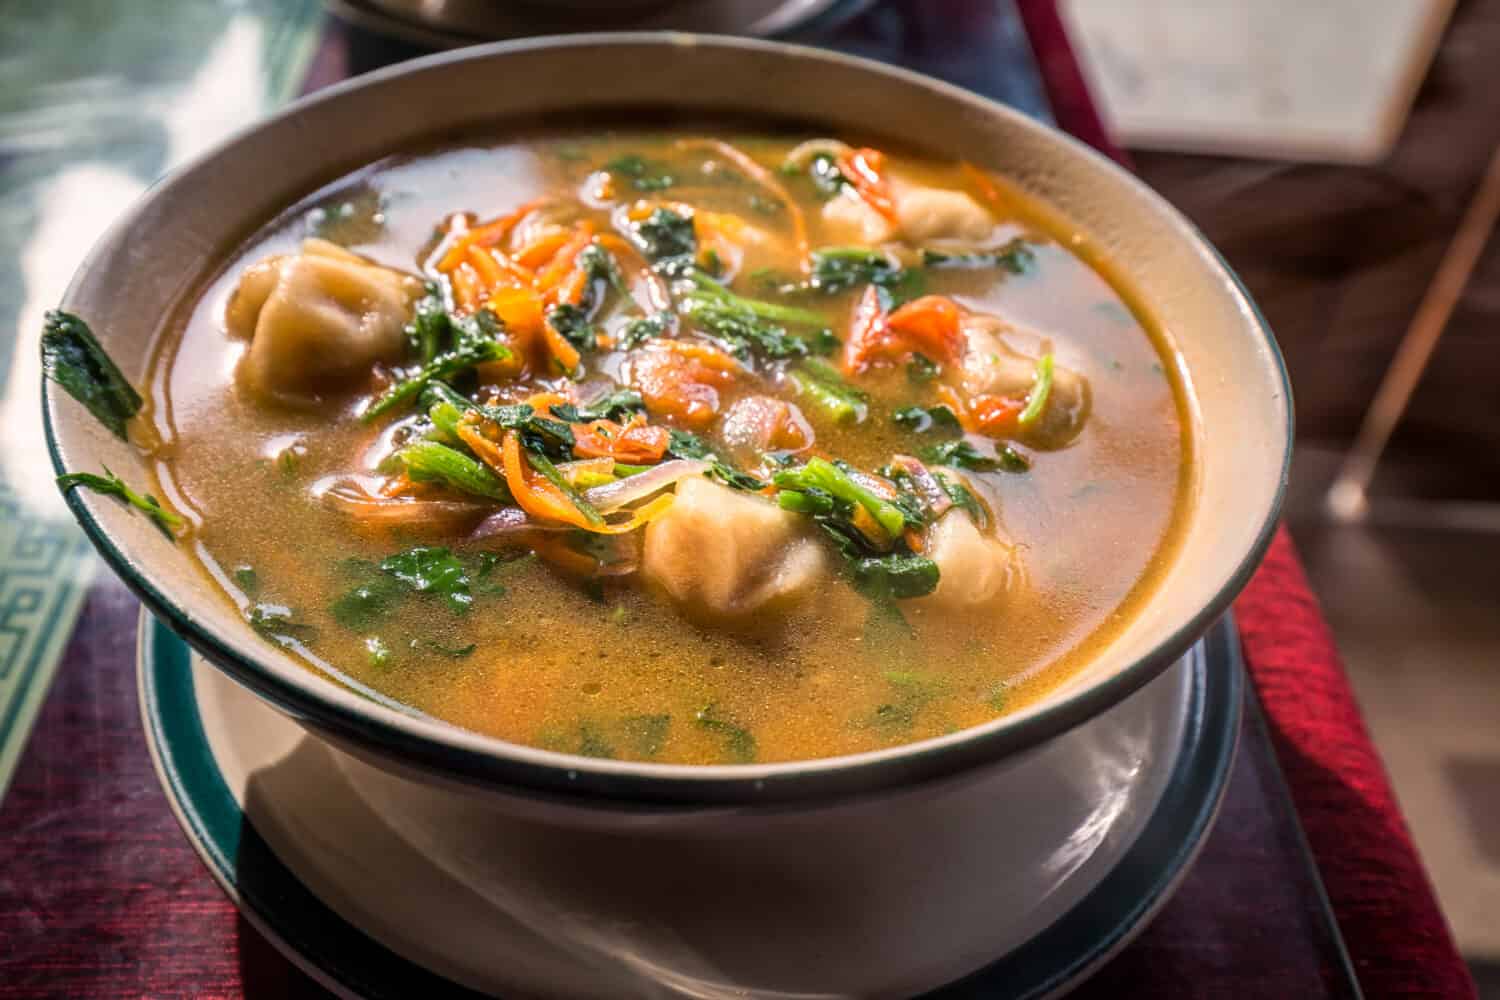 Traditional Tibetan food is momo soup with vegetables  Darjeeling, India.